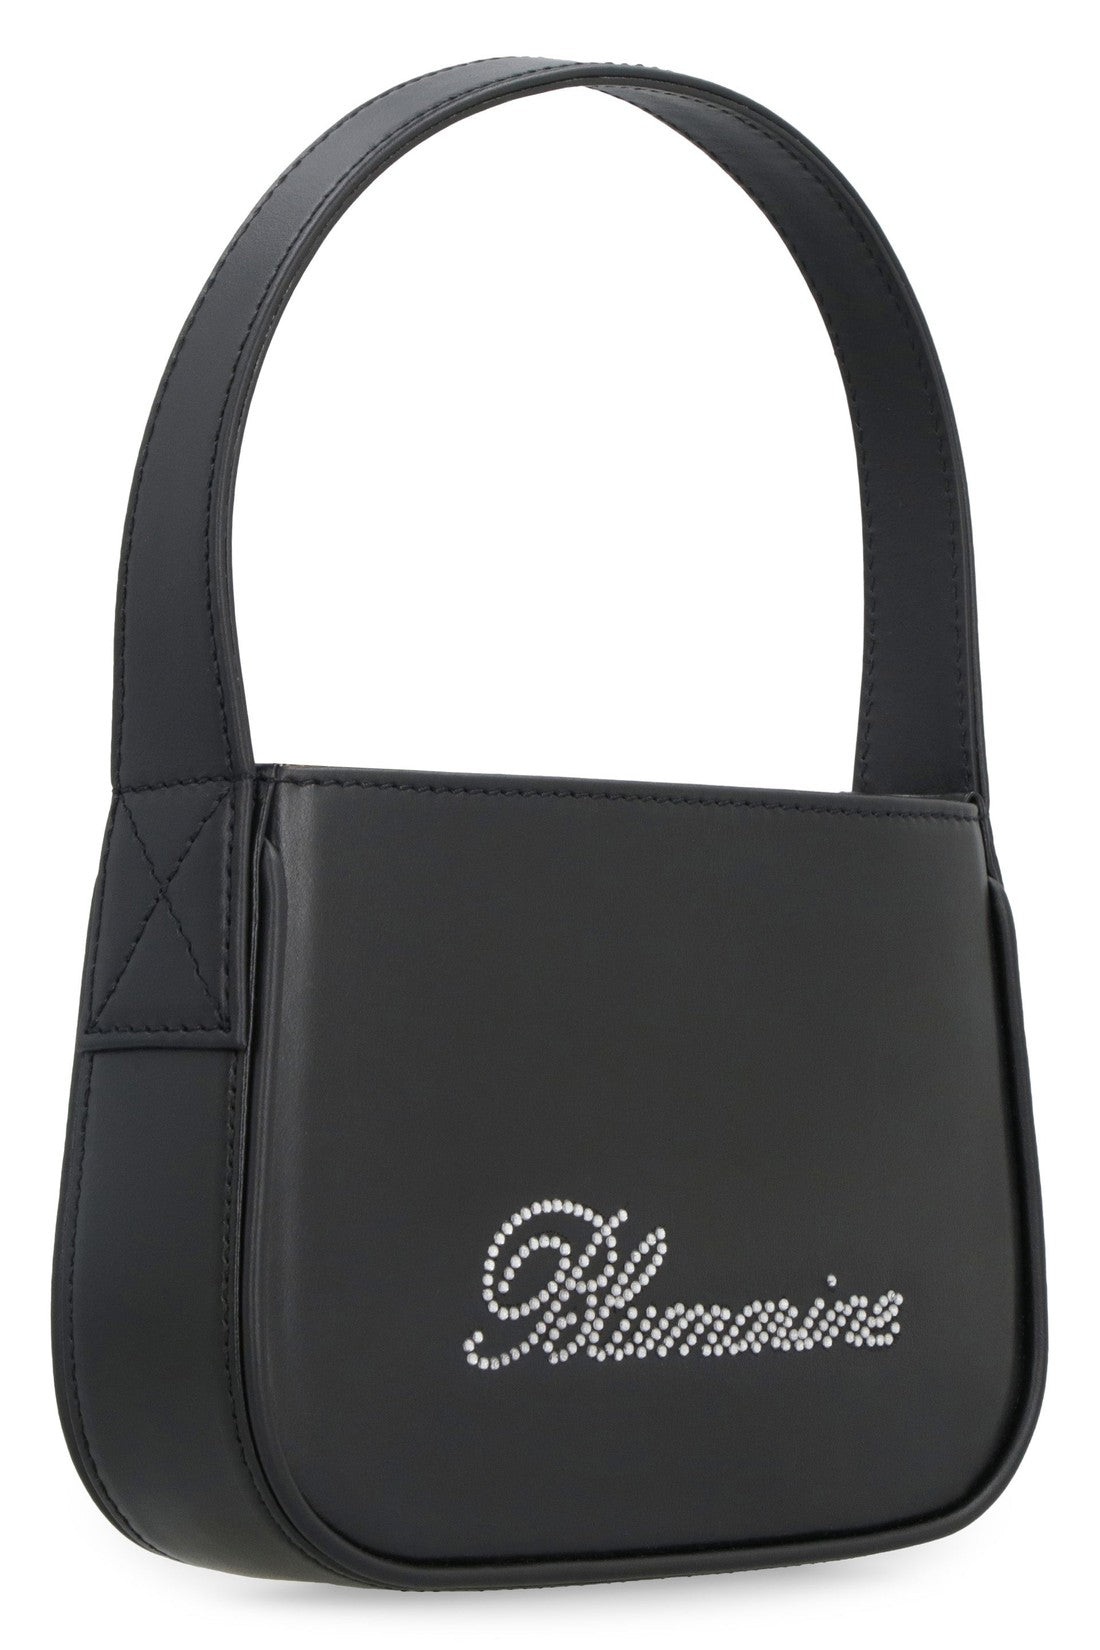 Blumarine-OUTLET-SALE-Logo print leather handbag-ARCHIVIST